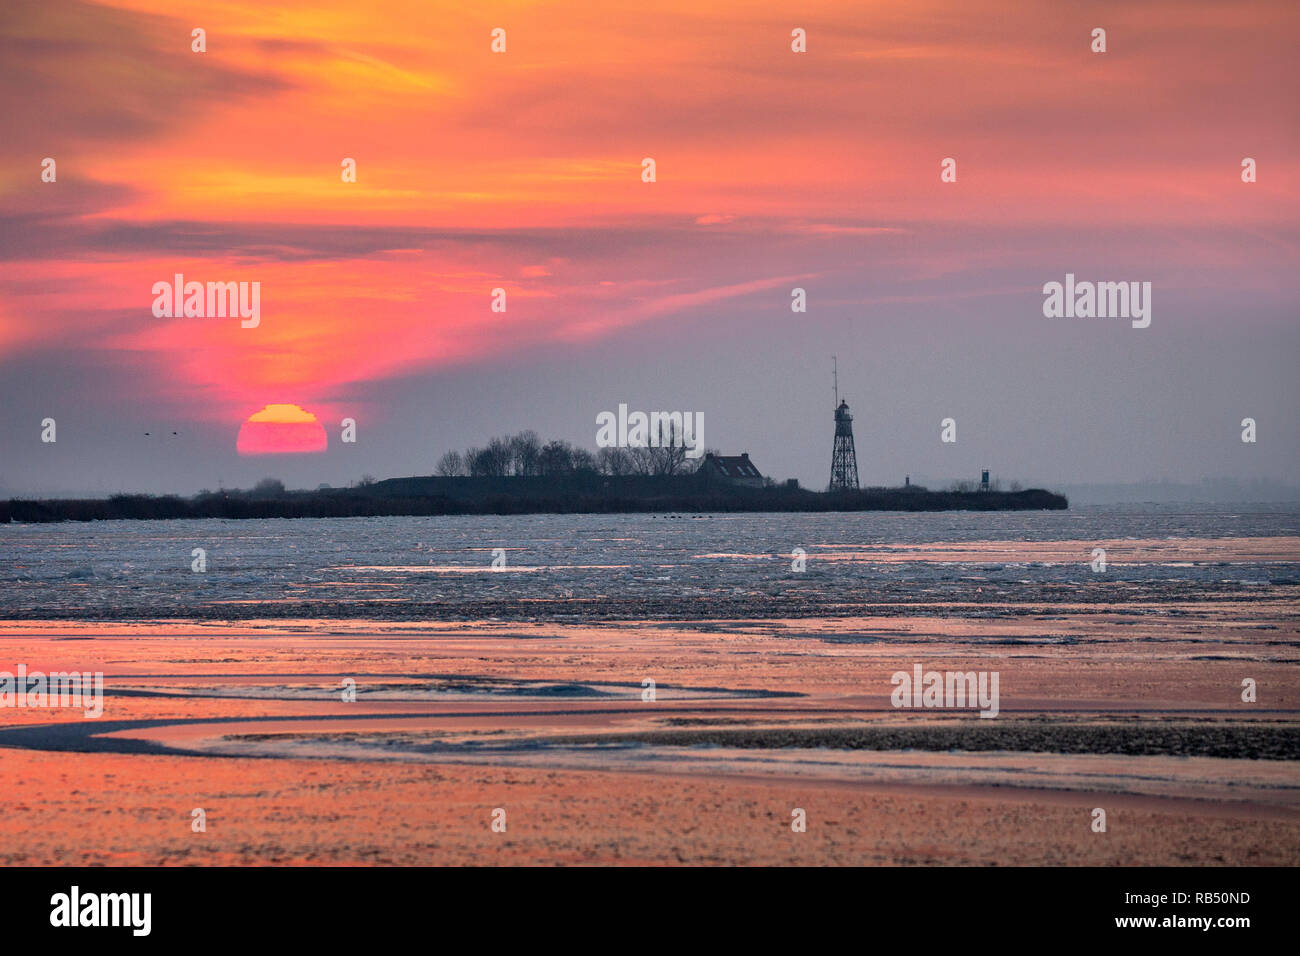 The Netherlands, Amsterdam, Durgerdam. Vuurtoreneiland (Lighthouse Island), a small island in the IJmeer. Winter. Ice. Sunrise. Stock Photo